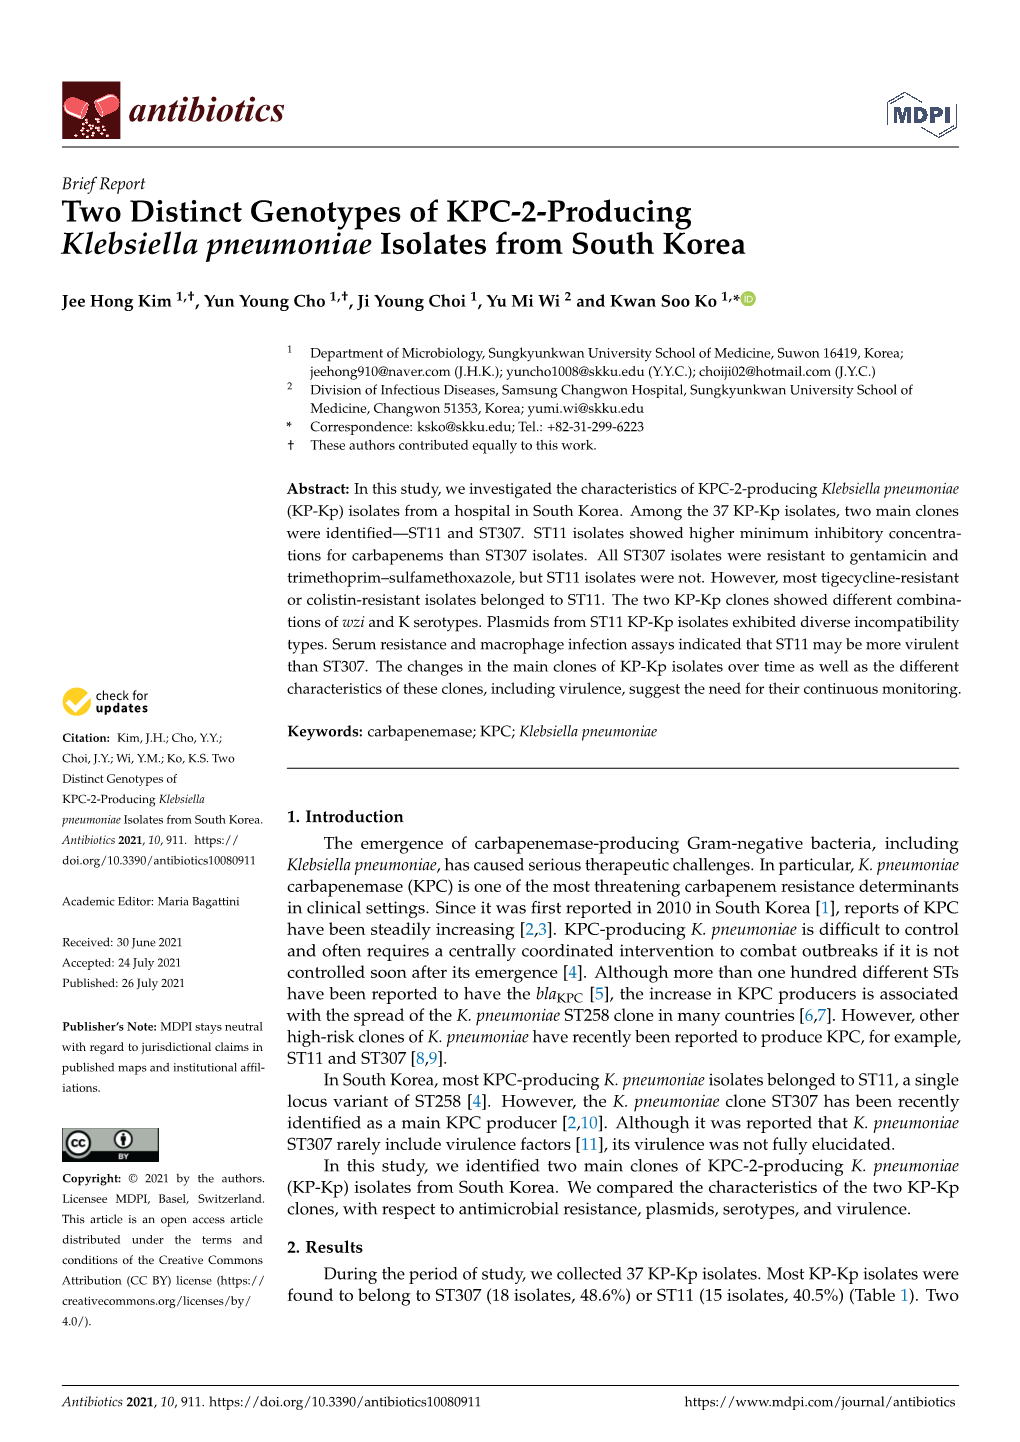 Two Distinct Genotypes of KPC-2-Producing Klebsiella Pneumoniae Isolates from South Korea